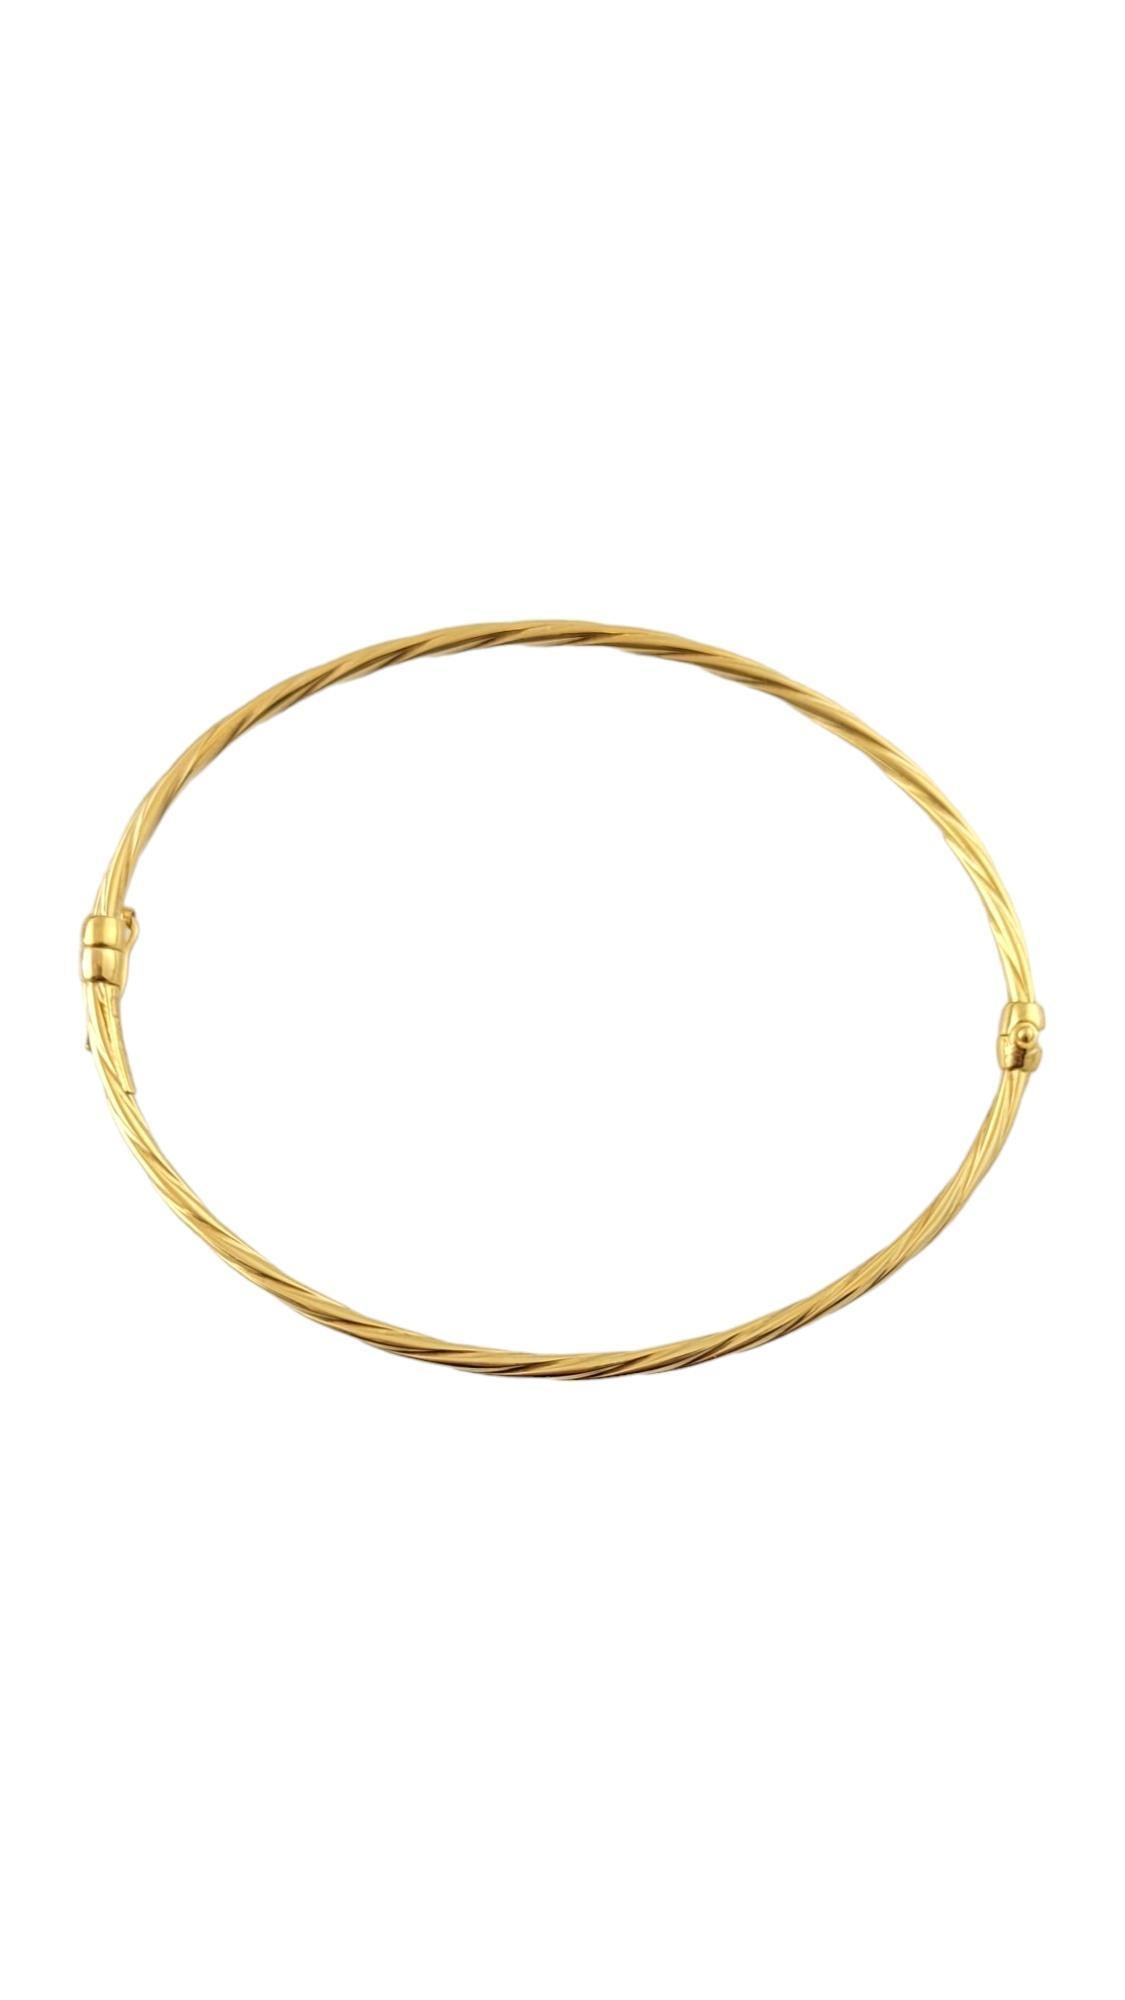  Bracelet torsadé en or jaune 18K #17336 Pour femmes 